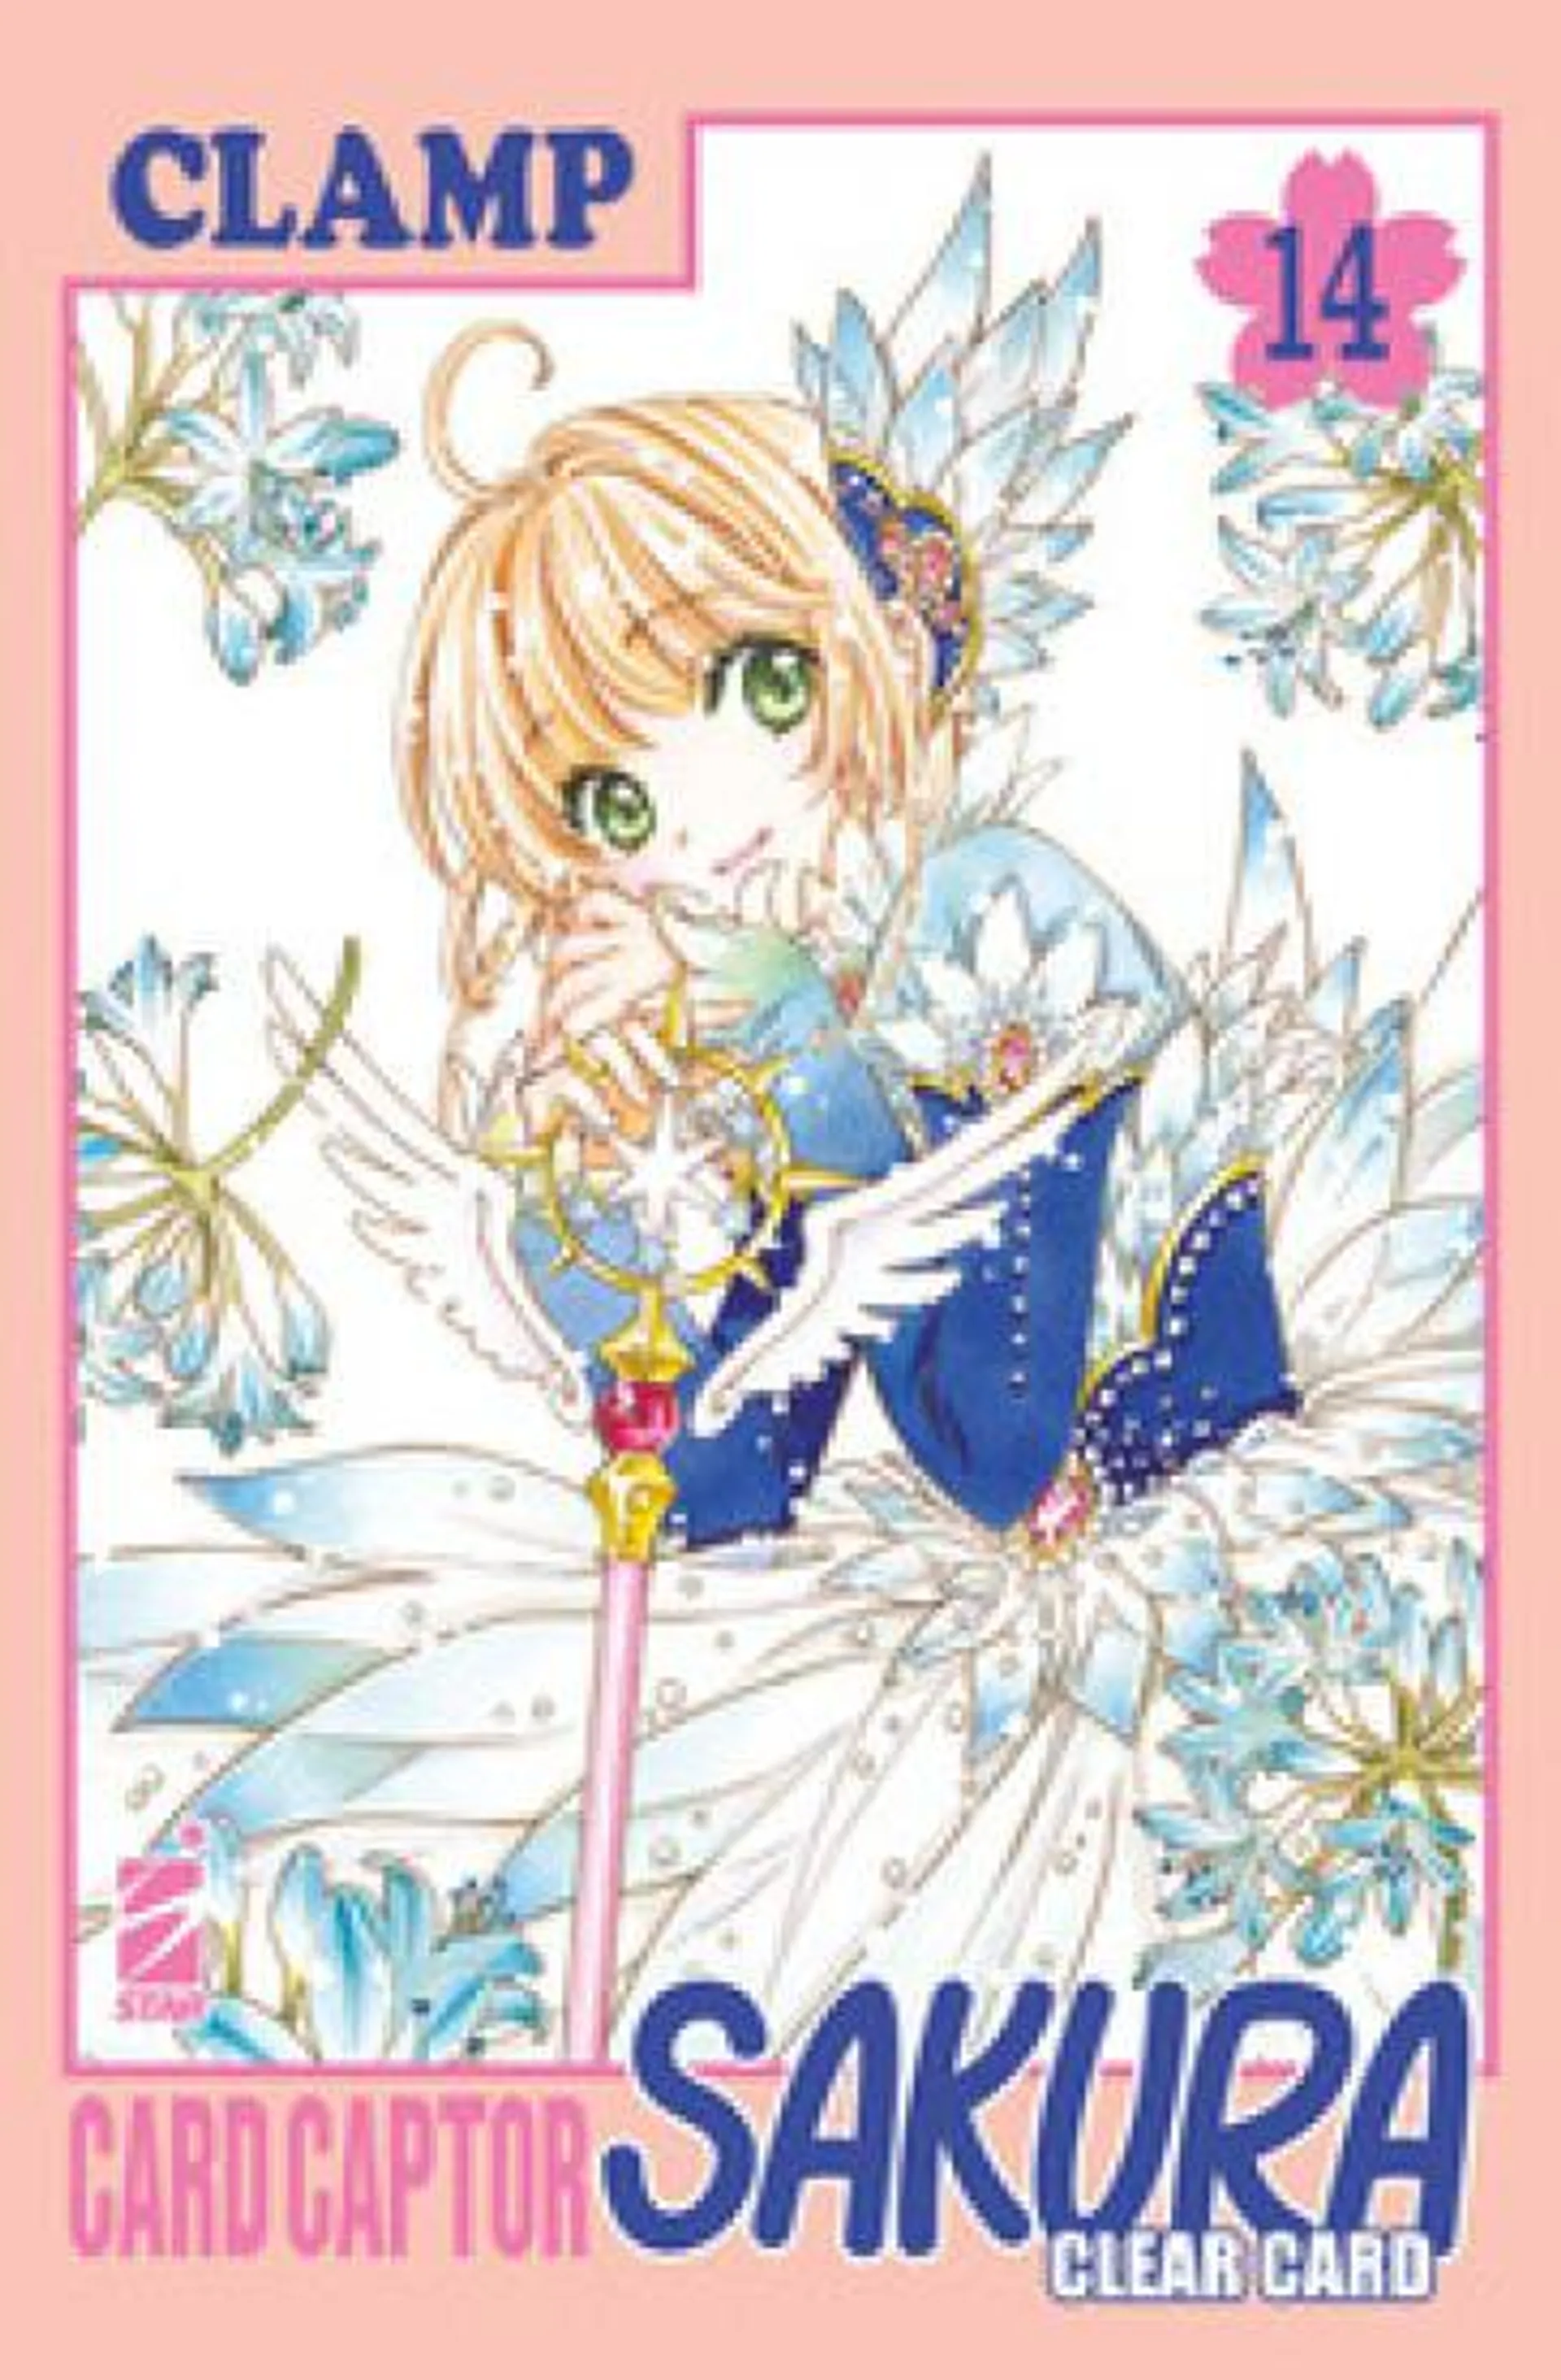 Cardcaptor Sakura. Clear card. 14.